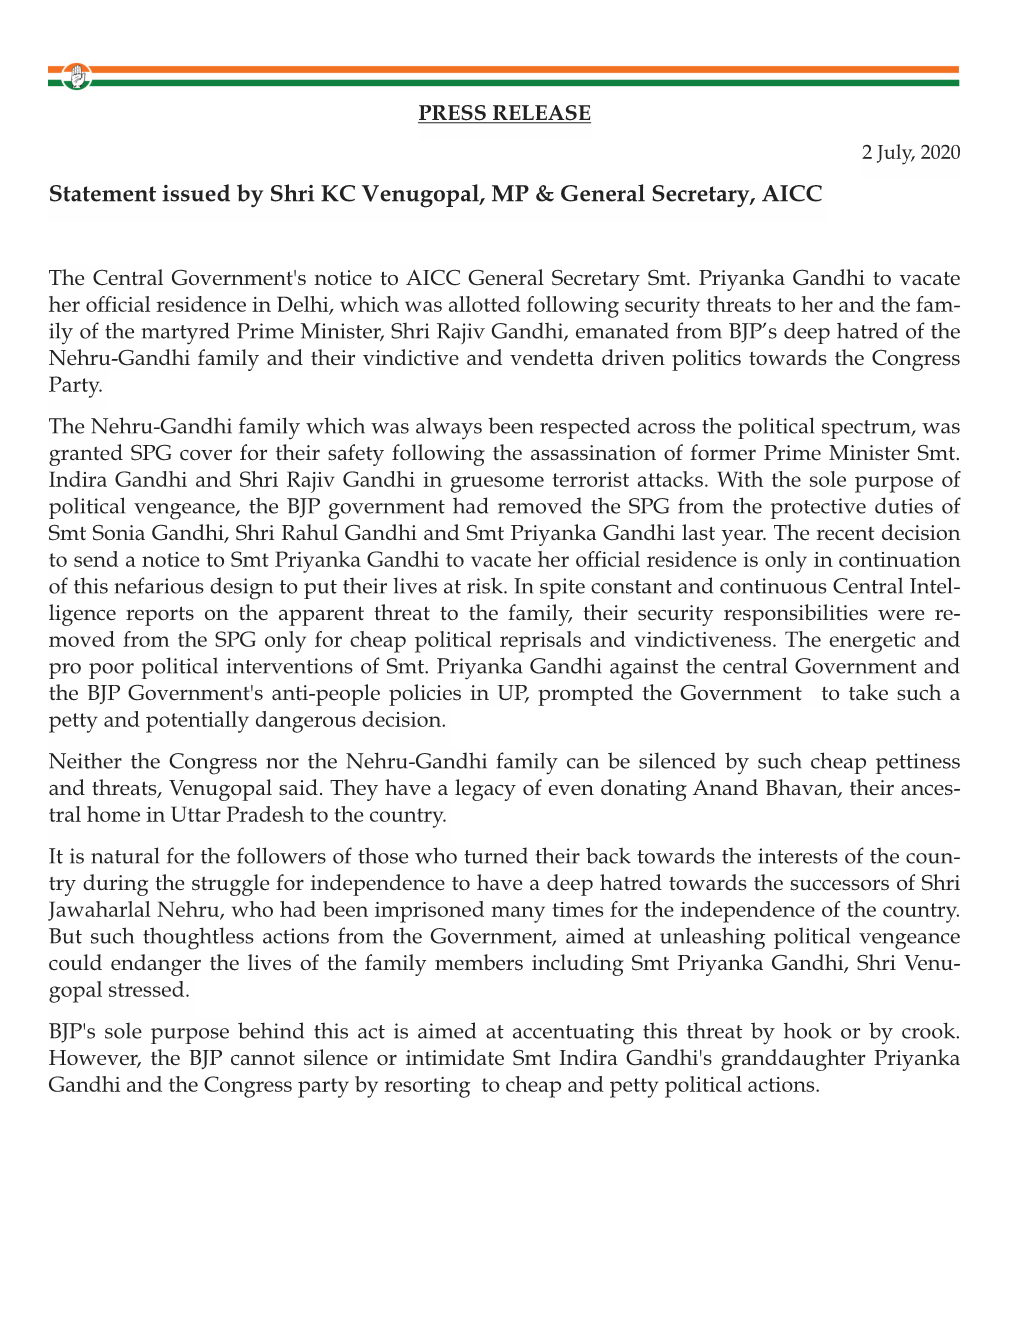 Statement Issued by Shri KC Venugopal, MP & General